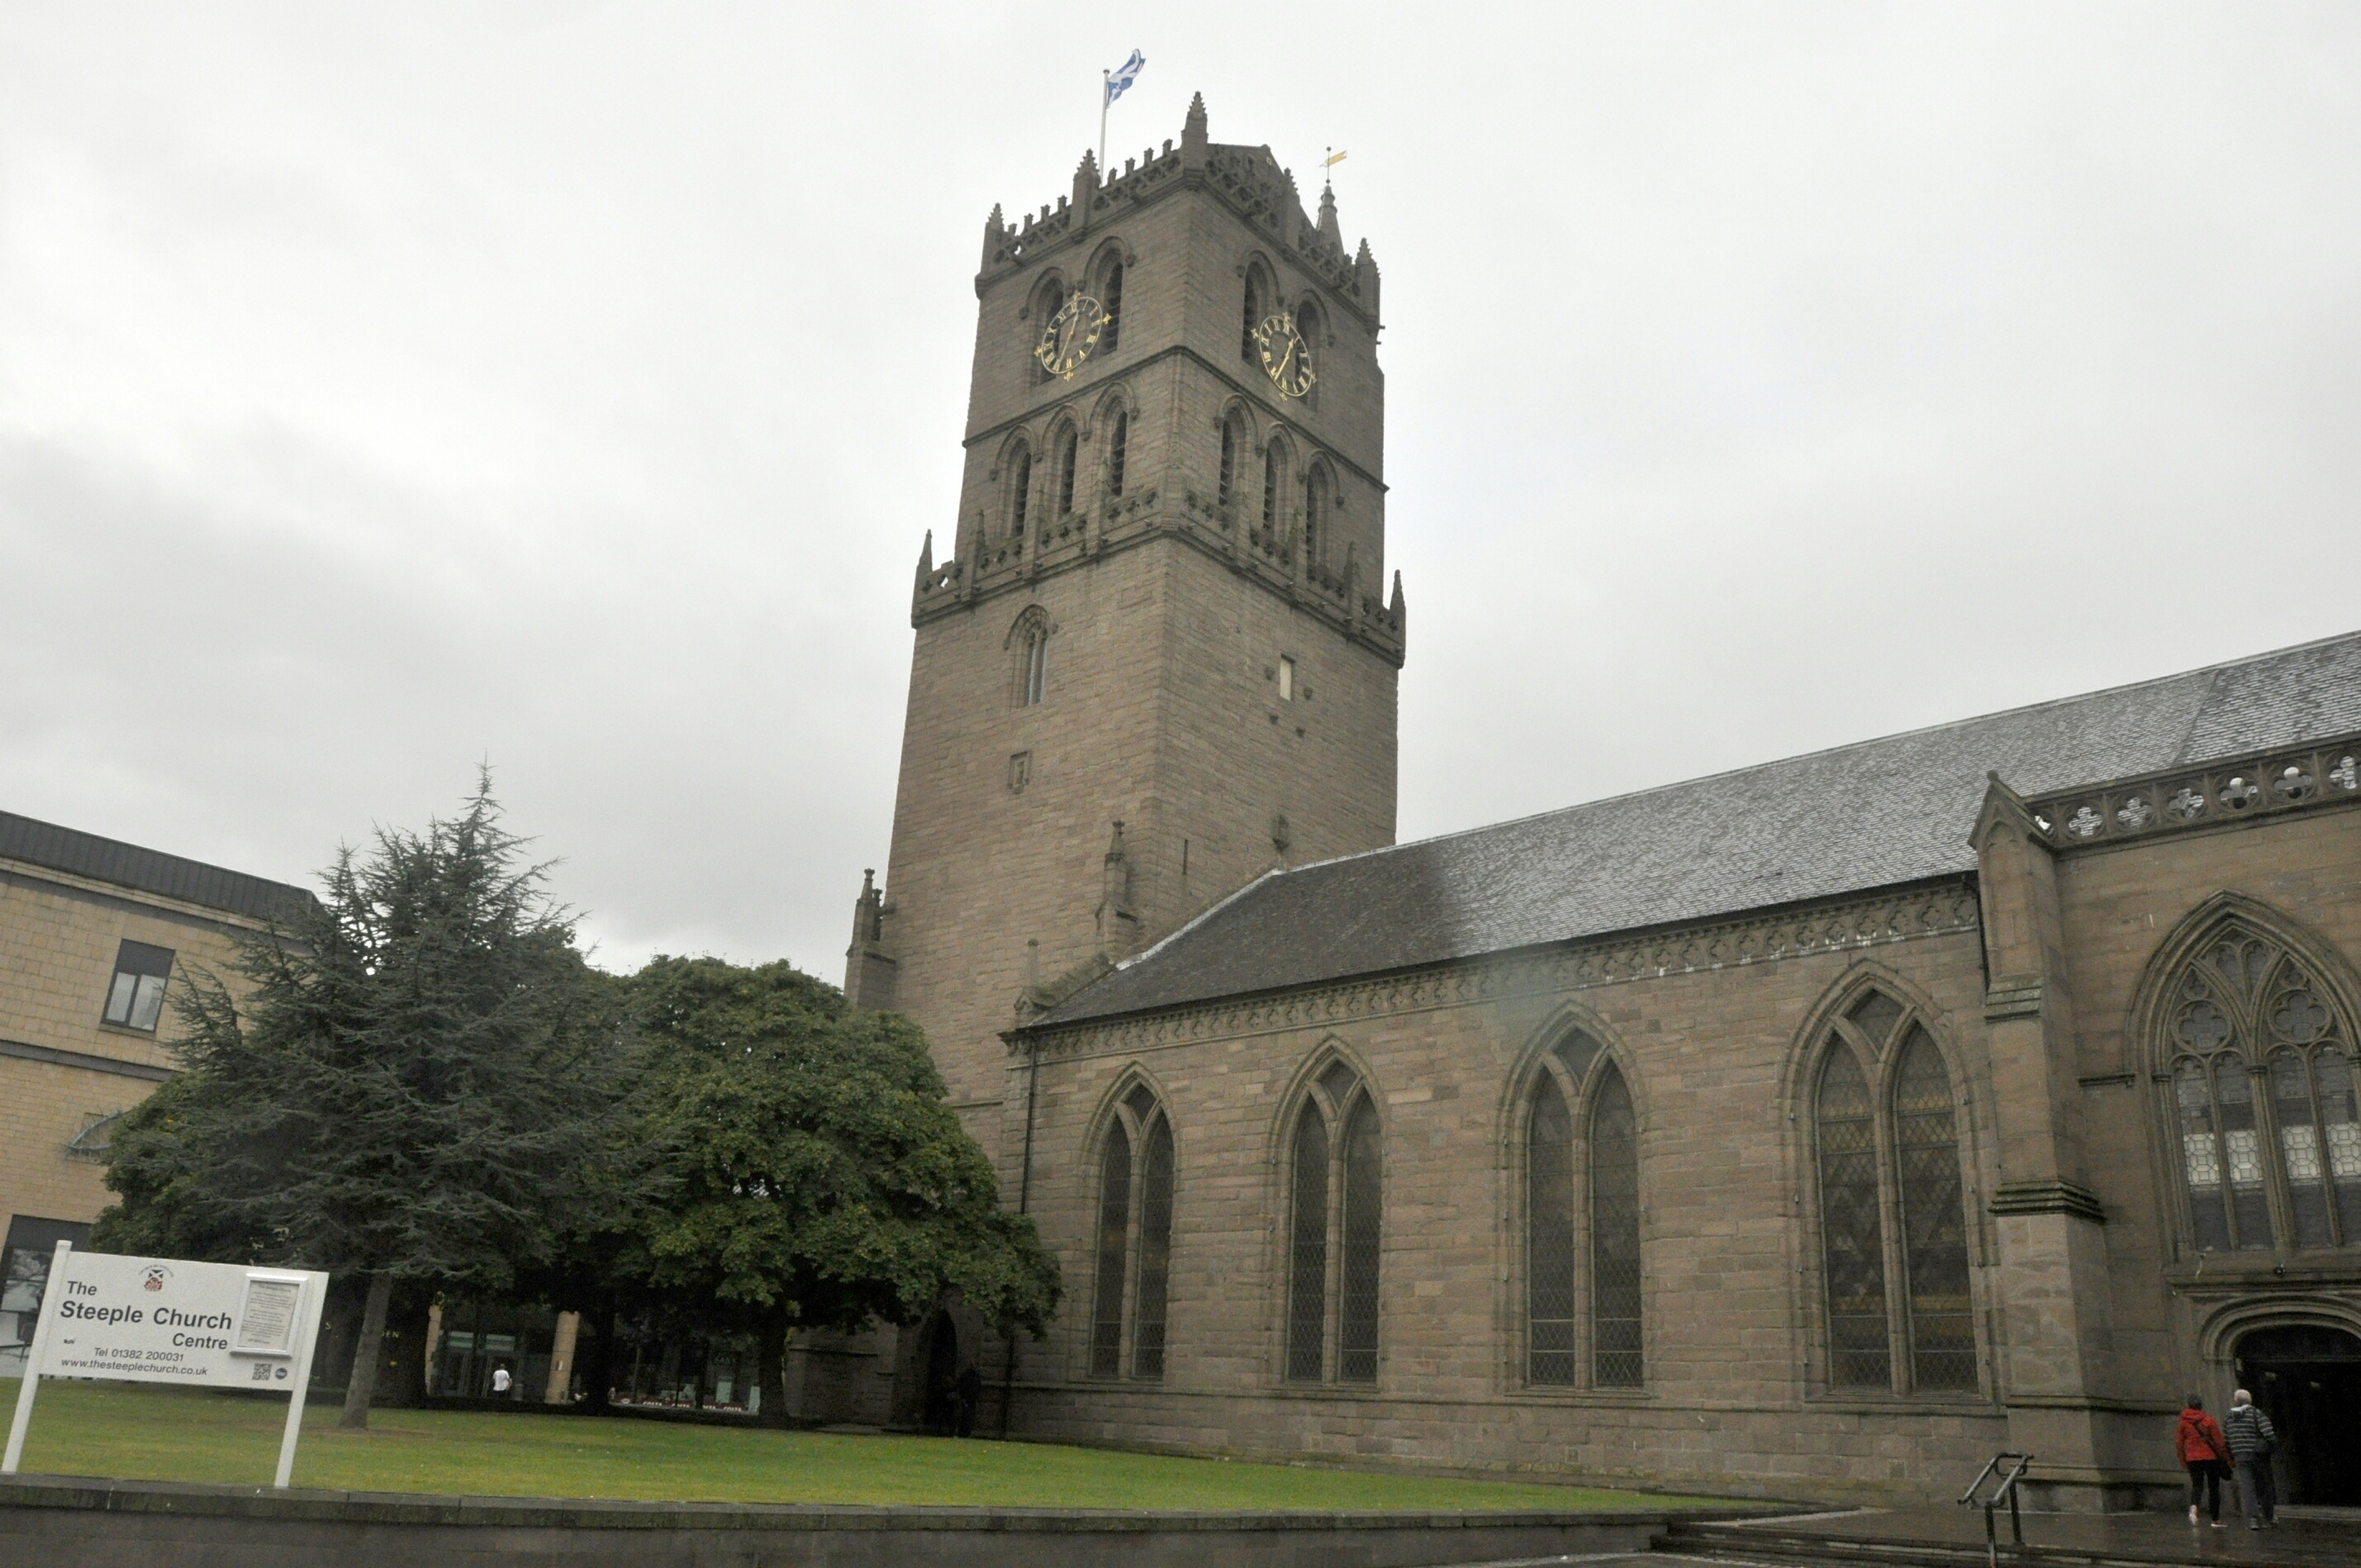 Steeple Church in Dundee.